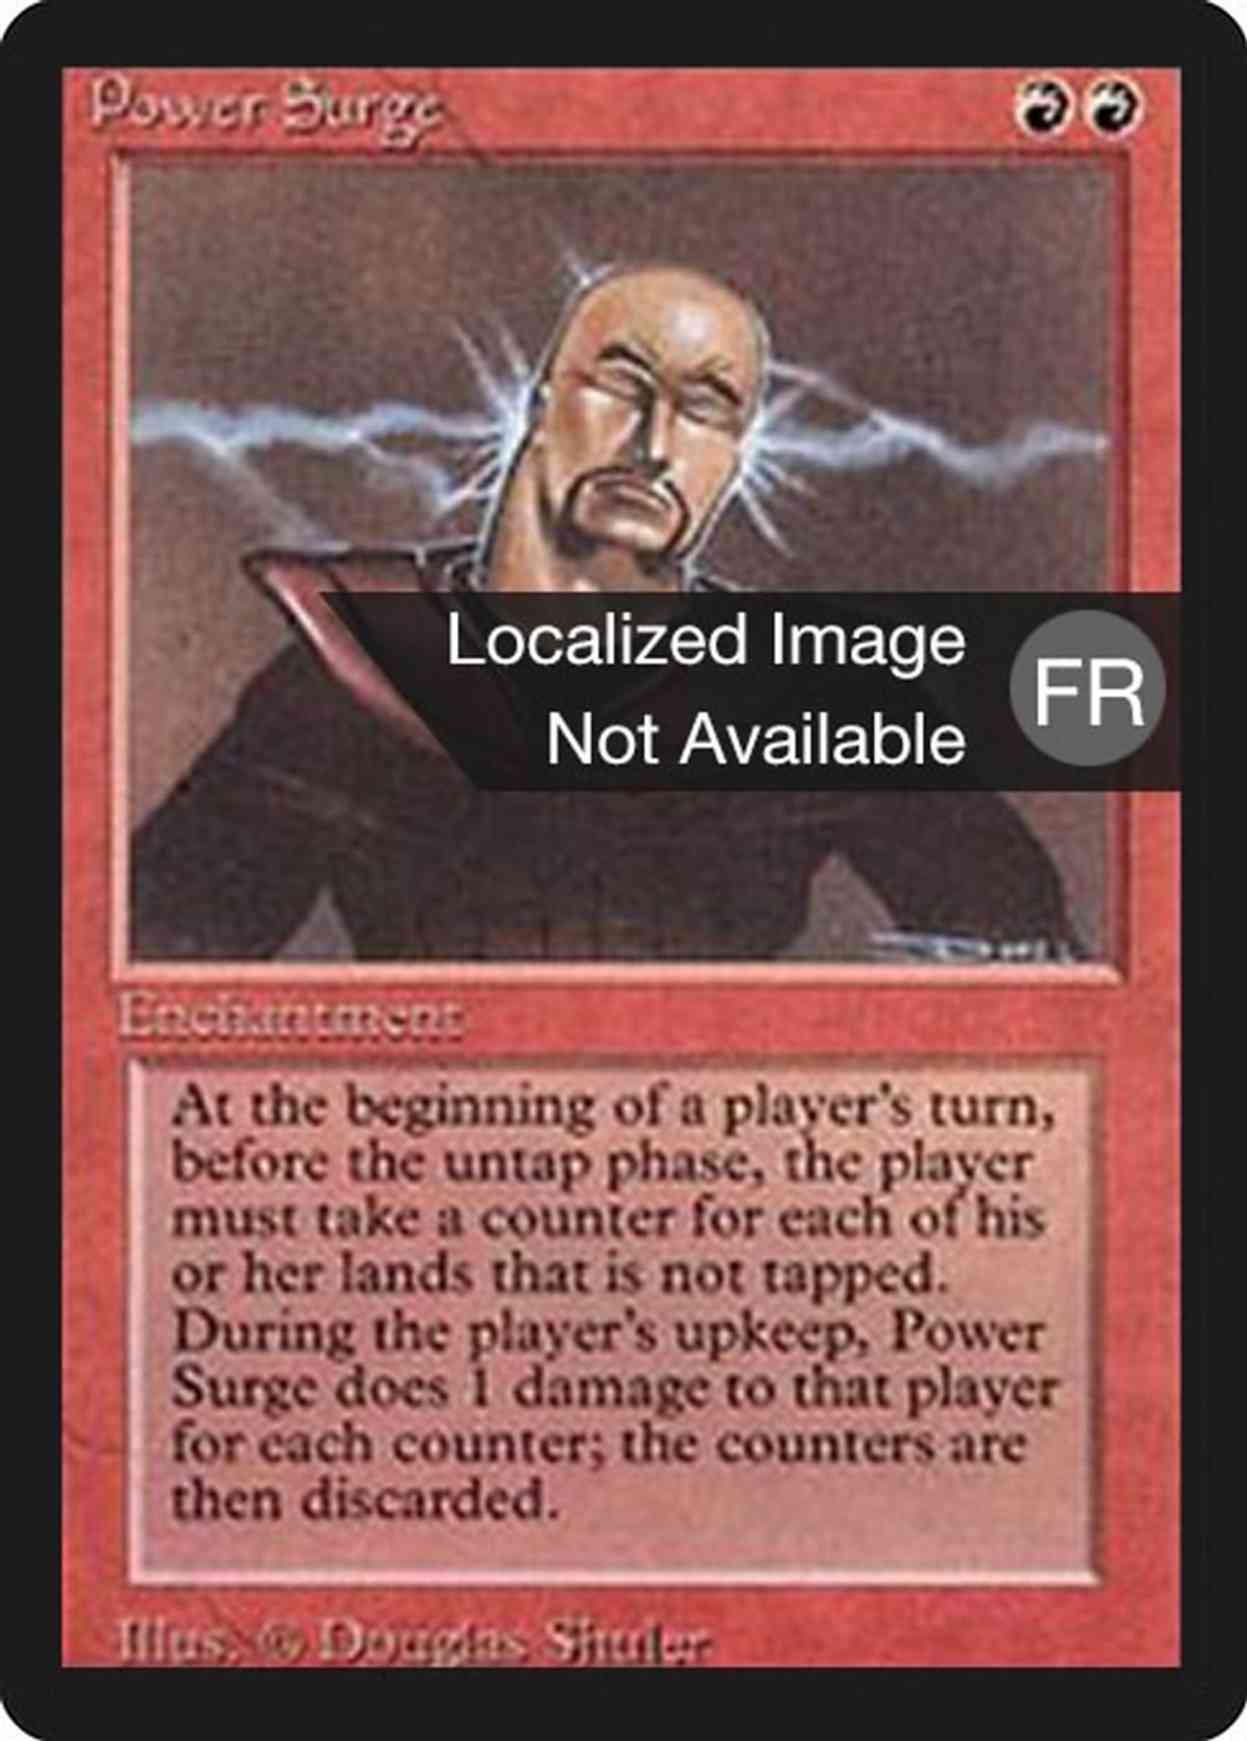 Power Surge magic card front